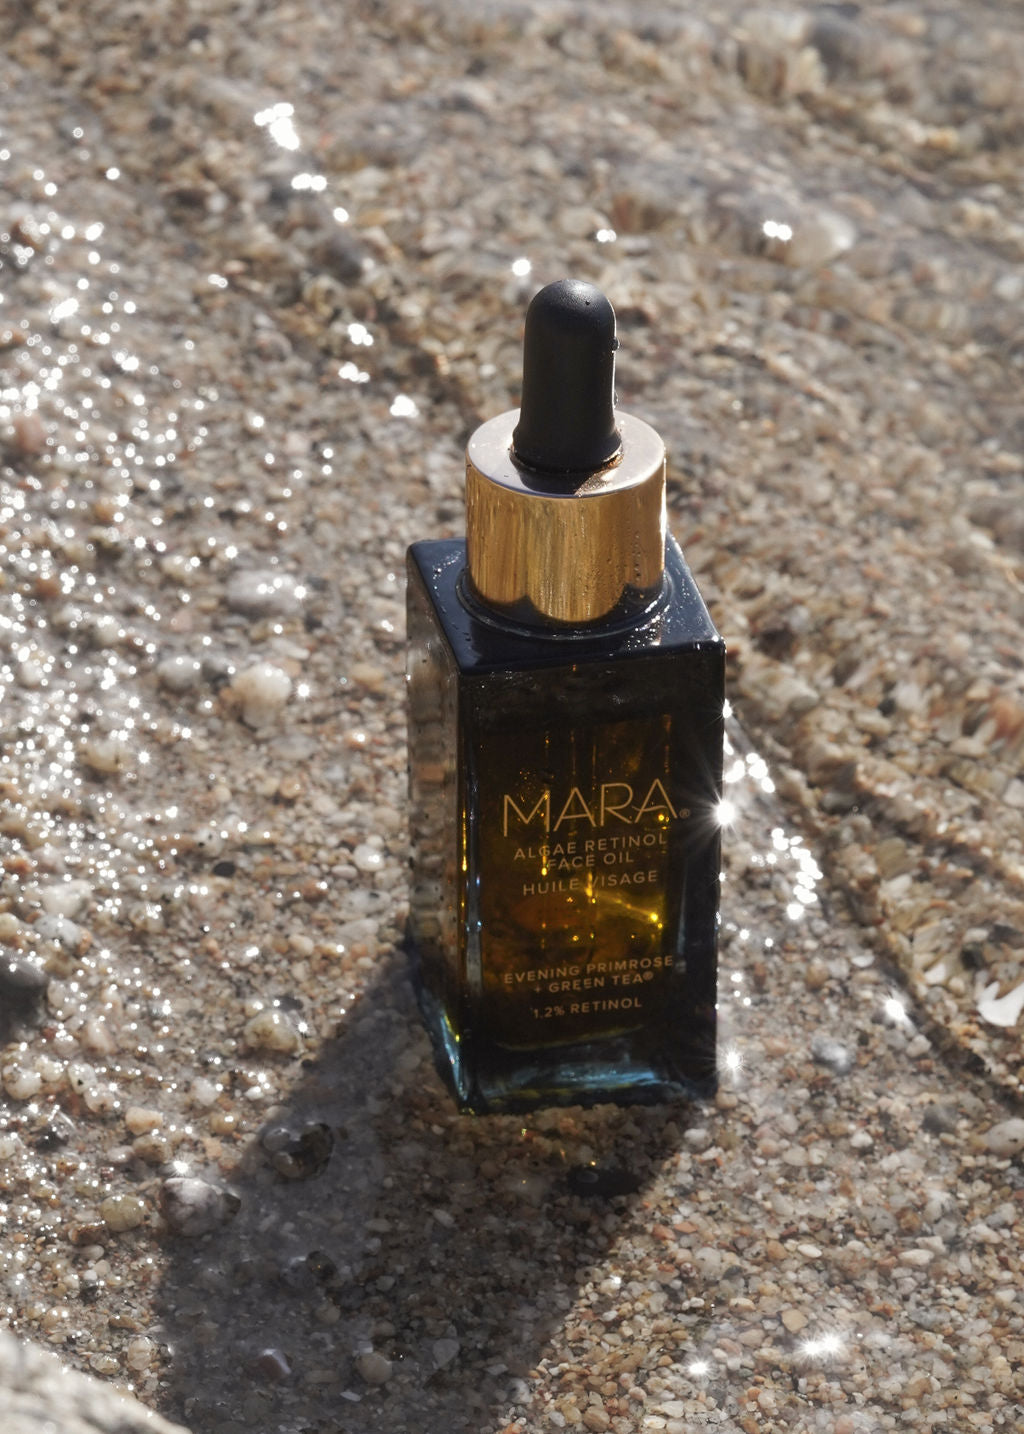 MARA Algae Retinol Face Oil on the shoreline with water